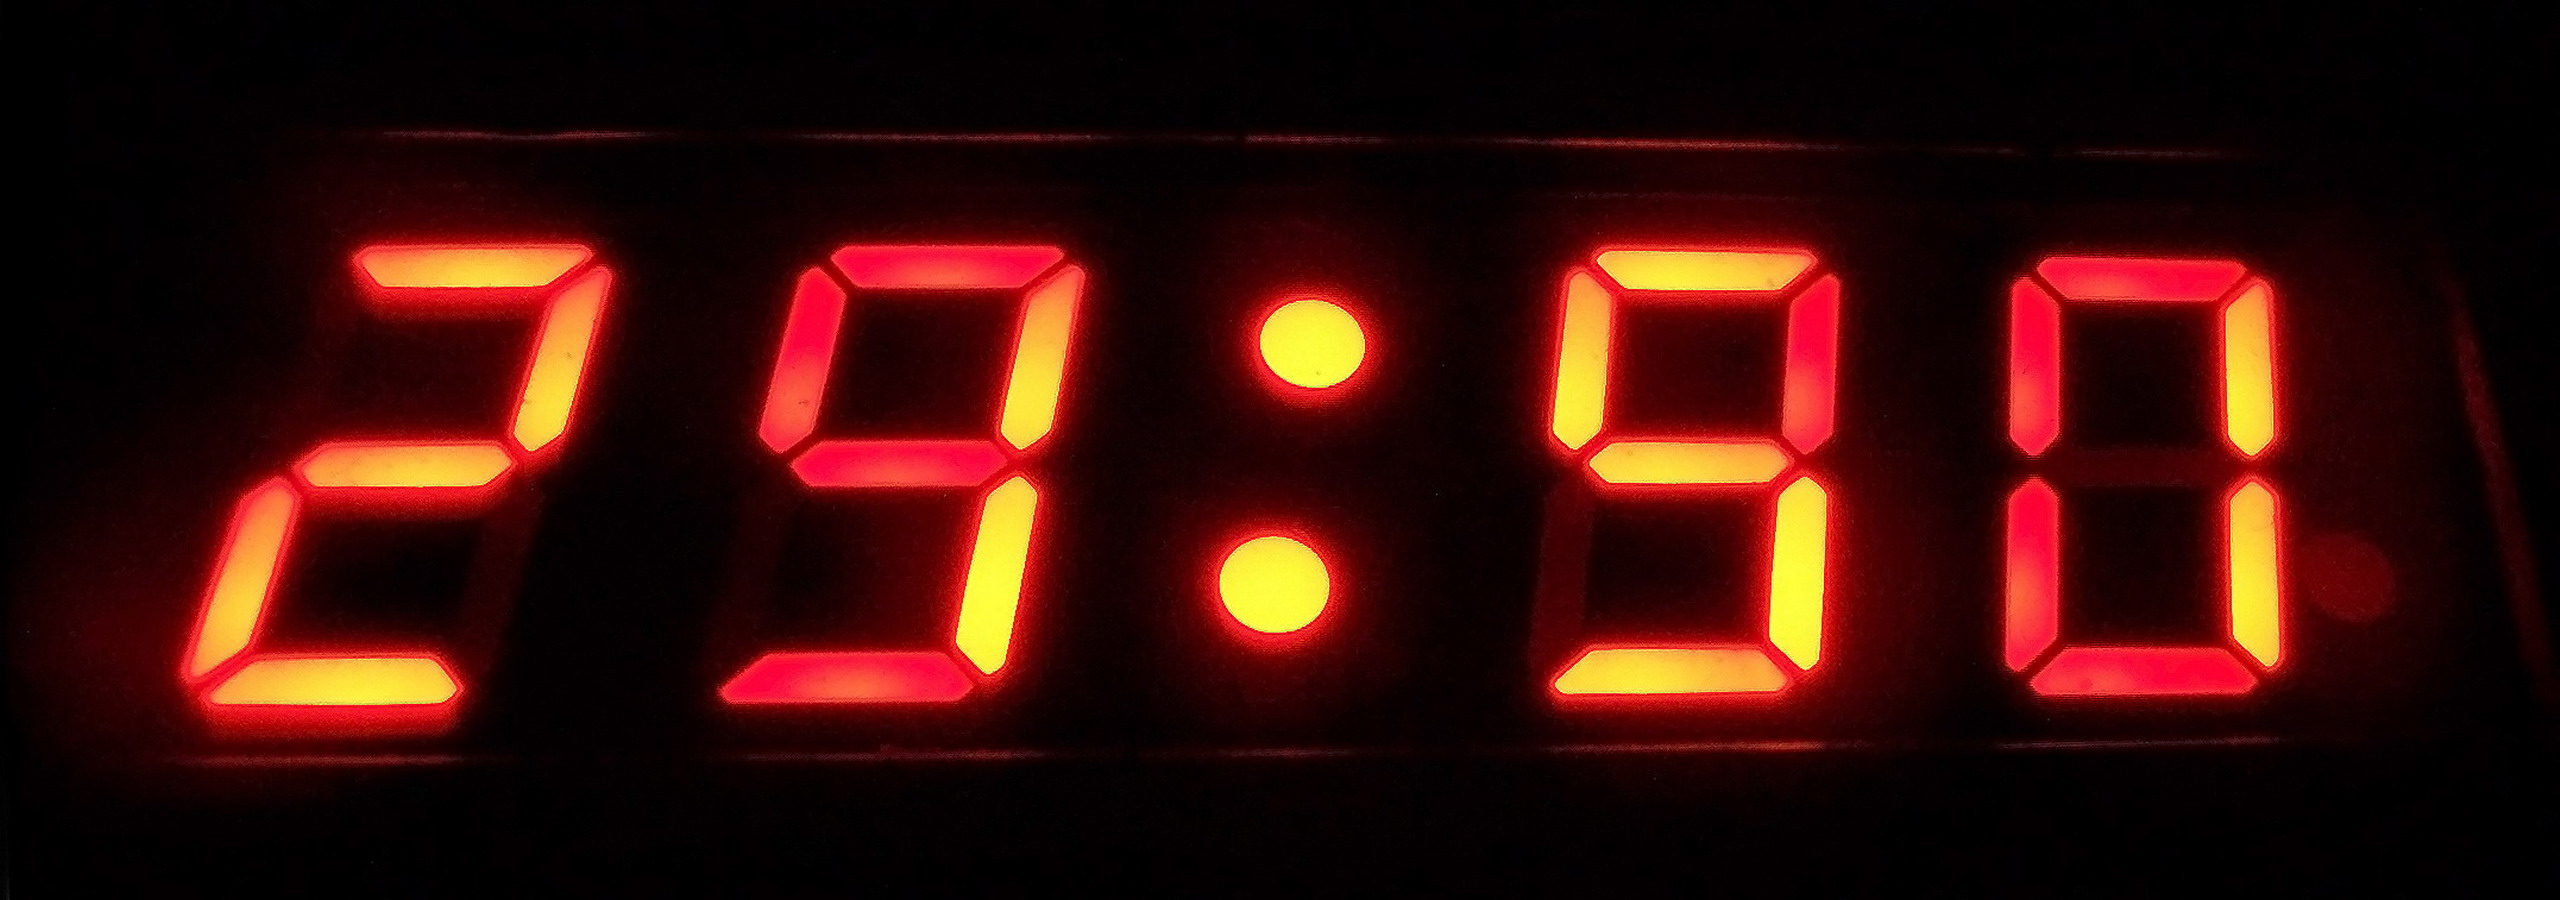 File:Digital clock changing numbers.jpg  Wikimedia Commons